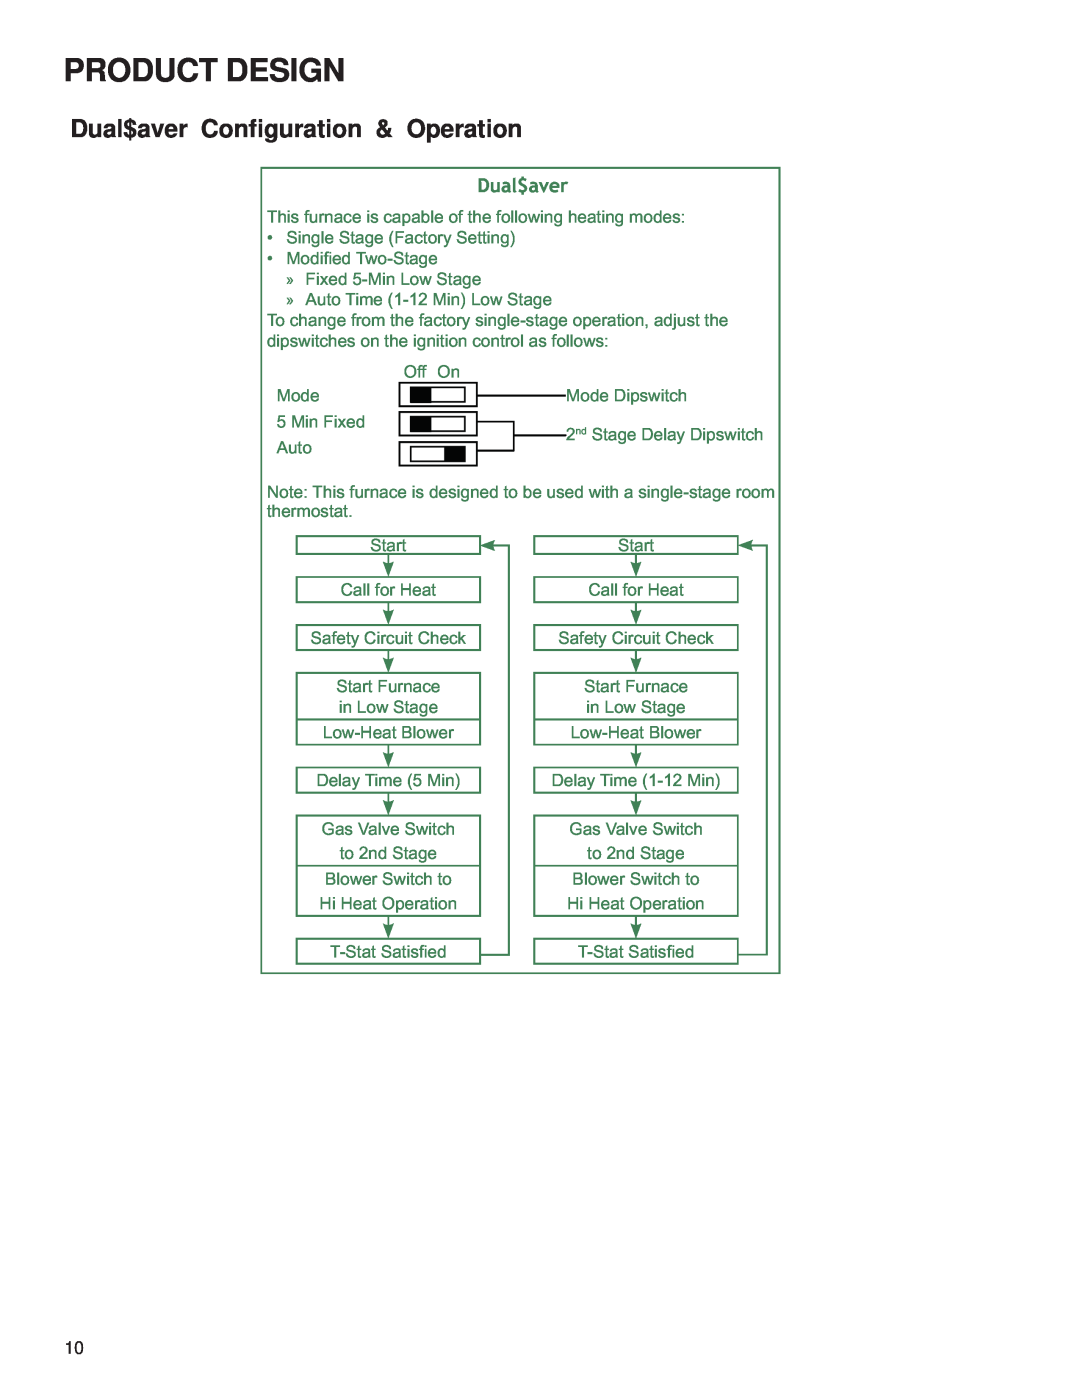 Goodman Mfg GME8 service manual Dual$aver Configuration & Operation, Product Design 